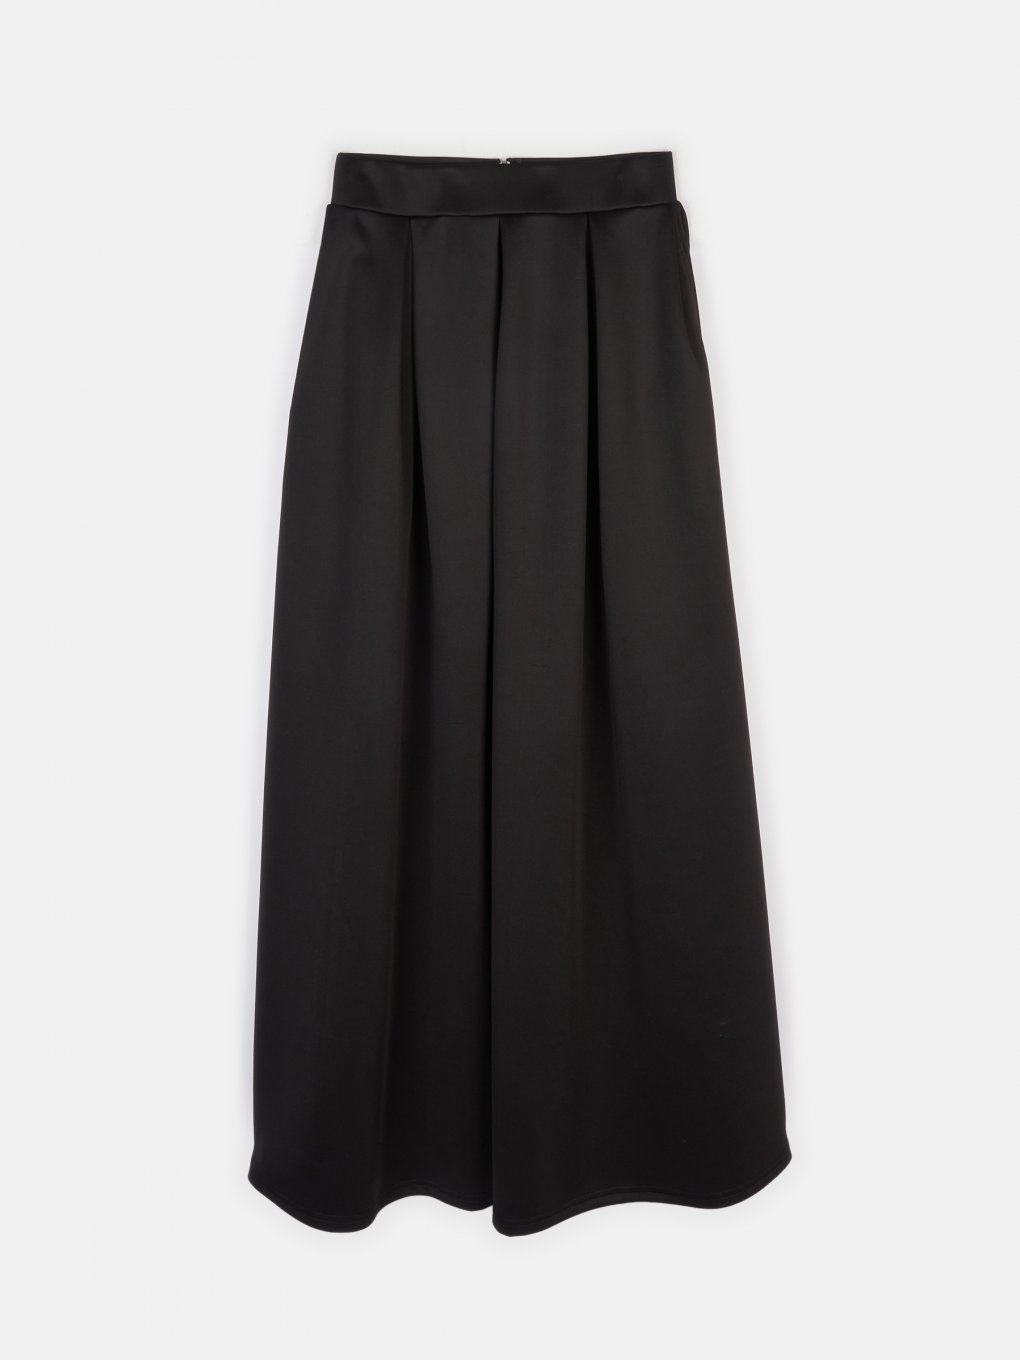 discount 63% Black 8Y IKKS casual skirt KIDS FASHION Skirts Ruffle 